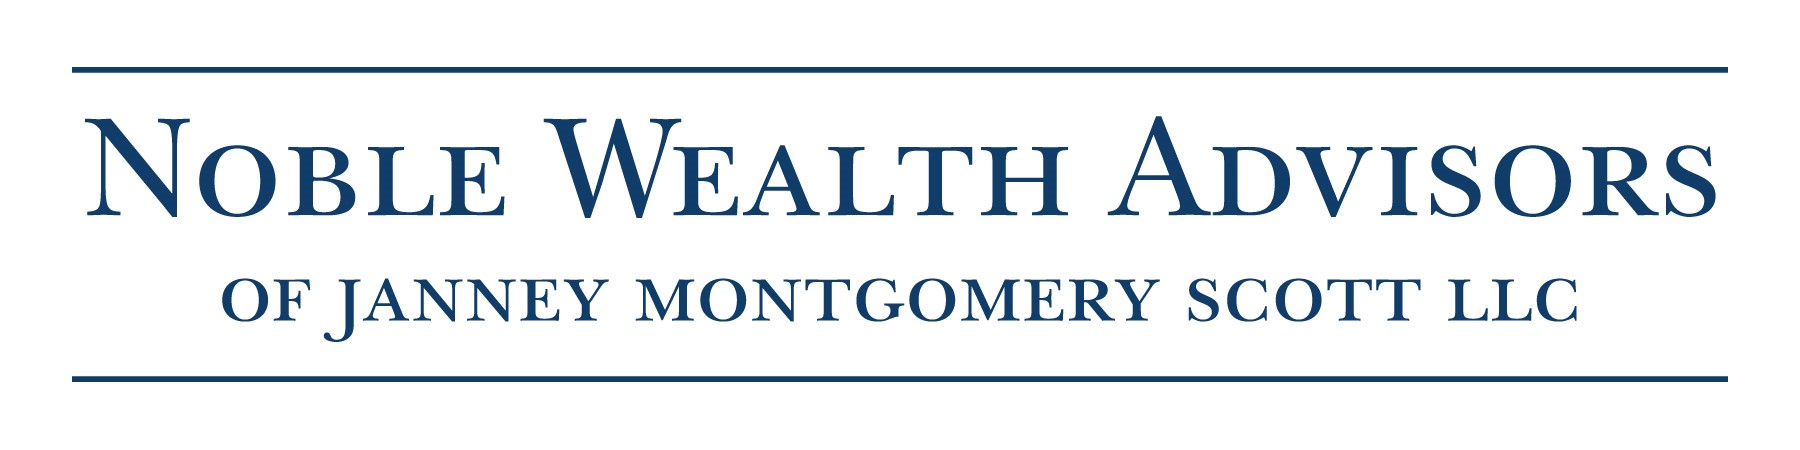 Noble Wealth Advisors of Janney Montgomery Scott LLC